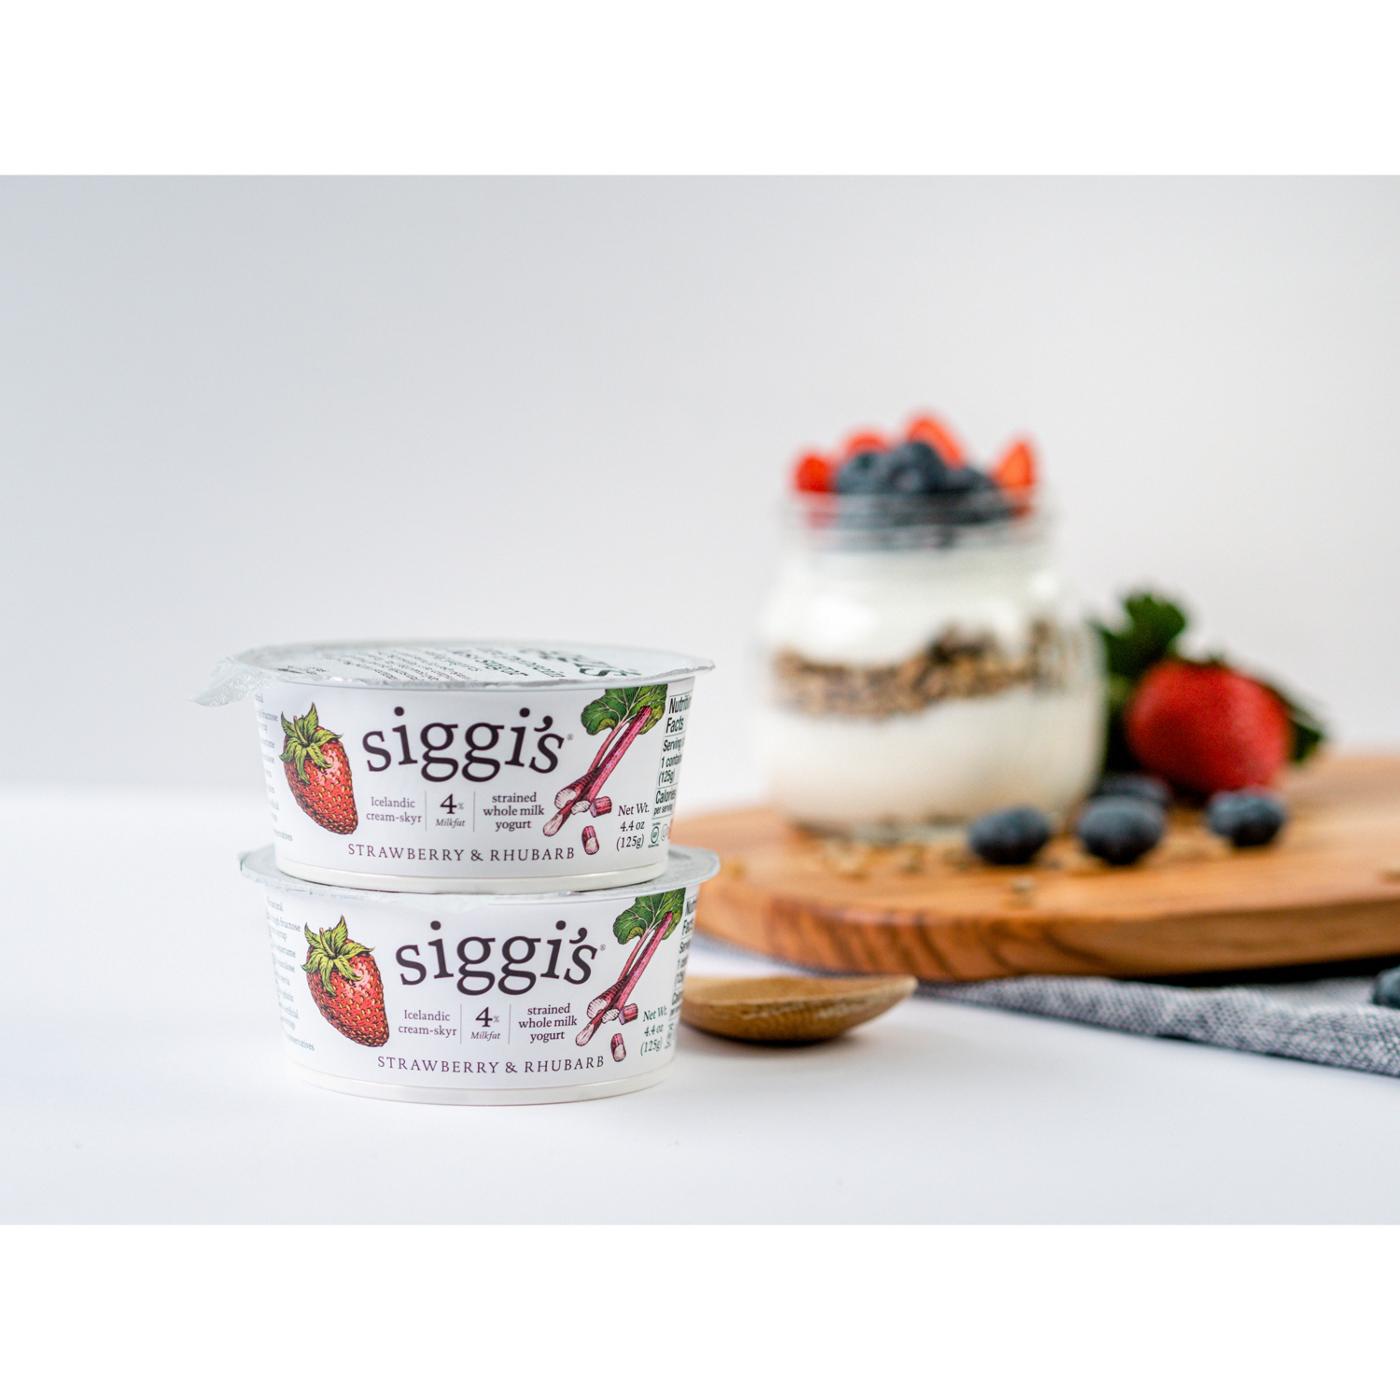 Siggi's 4% Strained Whole Milk Skyr Strawberry & Rhubarb Yogurt; image 2 of 2